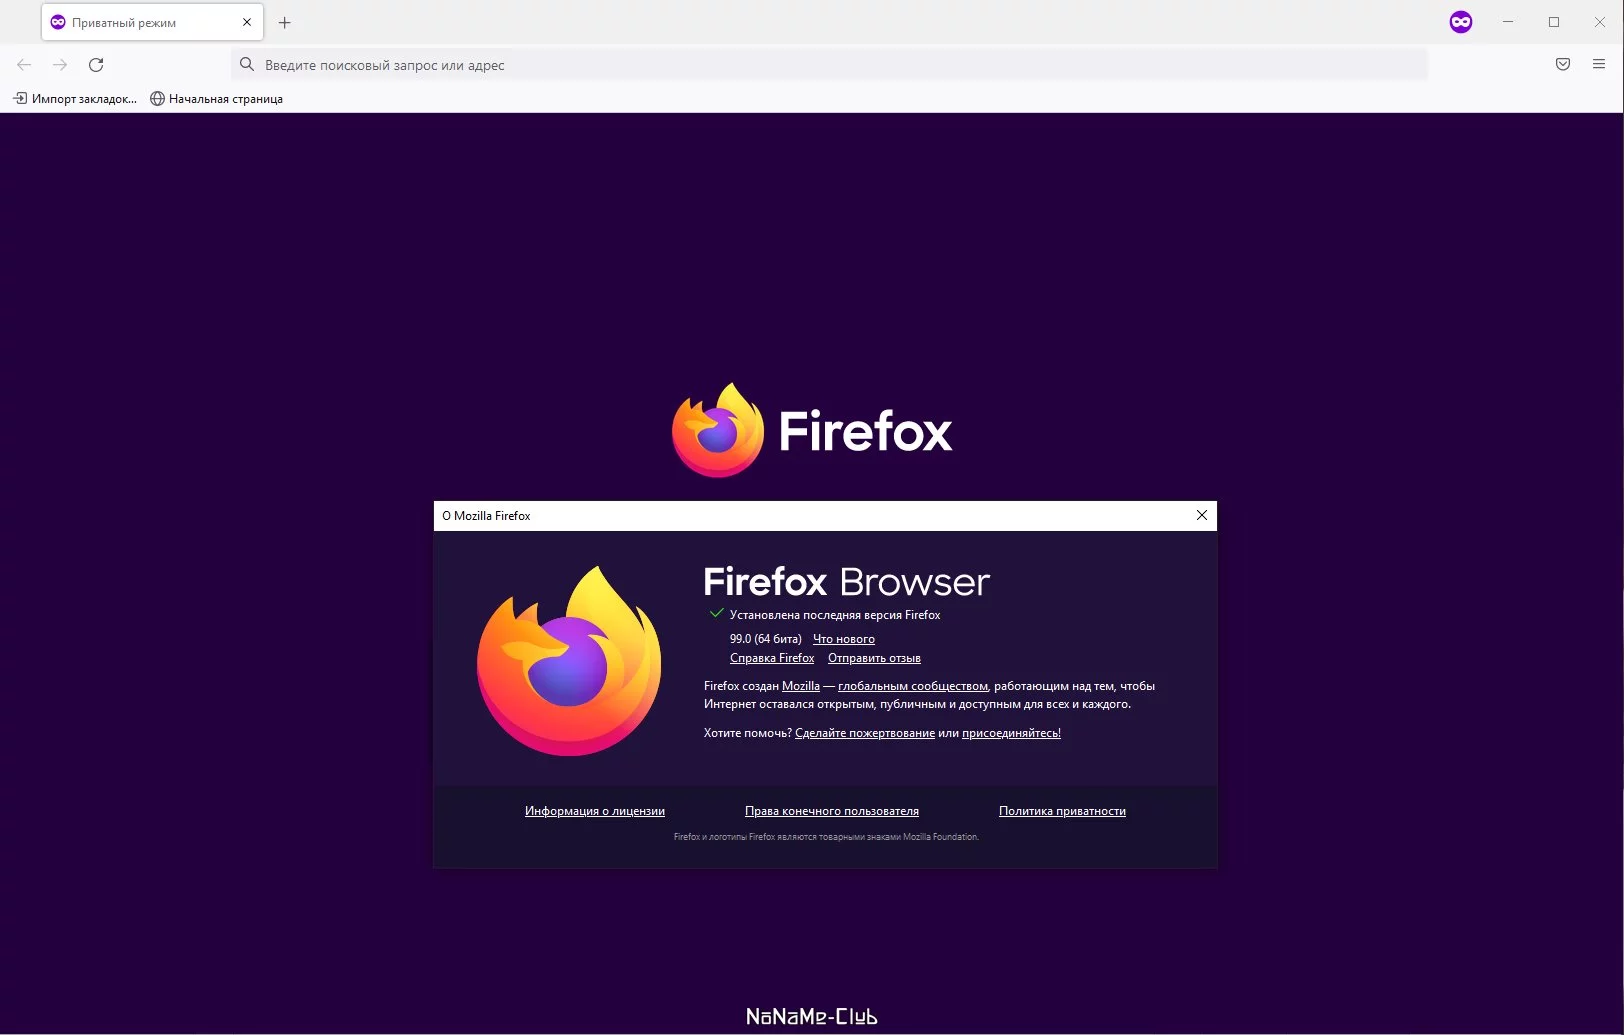 Версия браузера firefox. Браузер девяностых. Firefox Portable. Как узнать версию мозилы браузера. Firefox browser Design 2022.